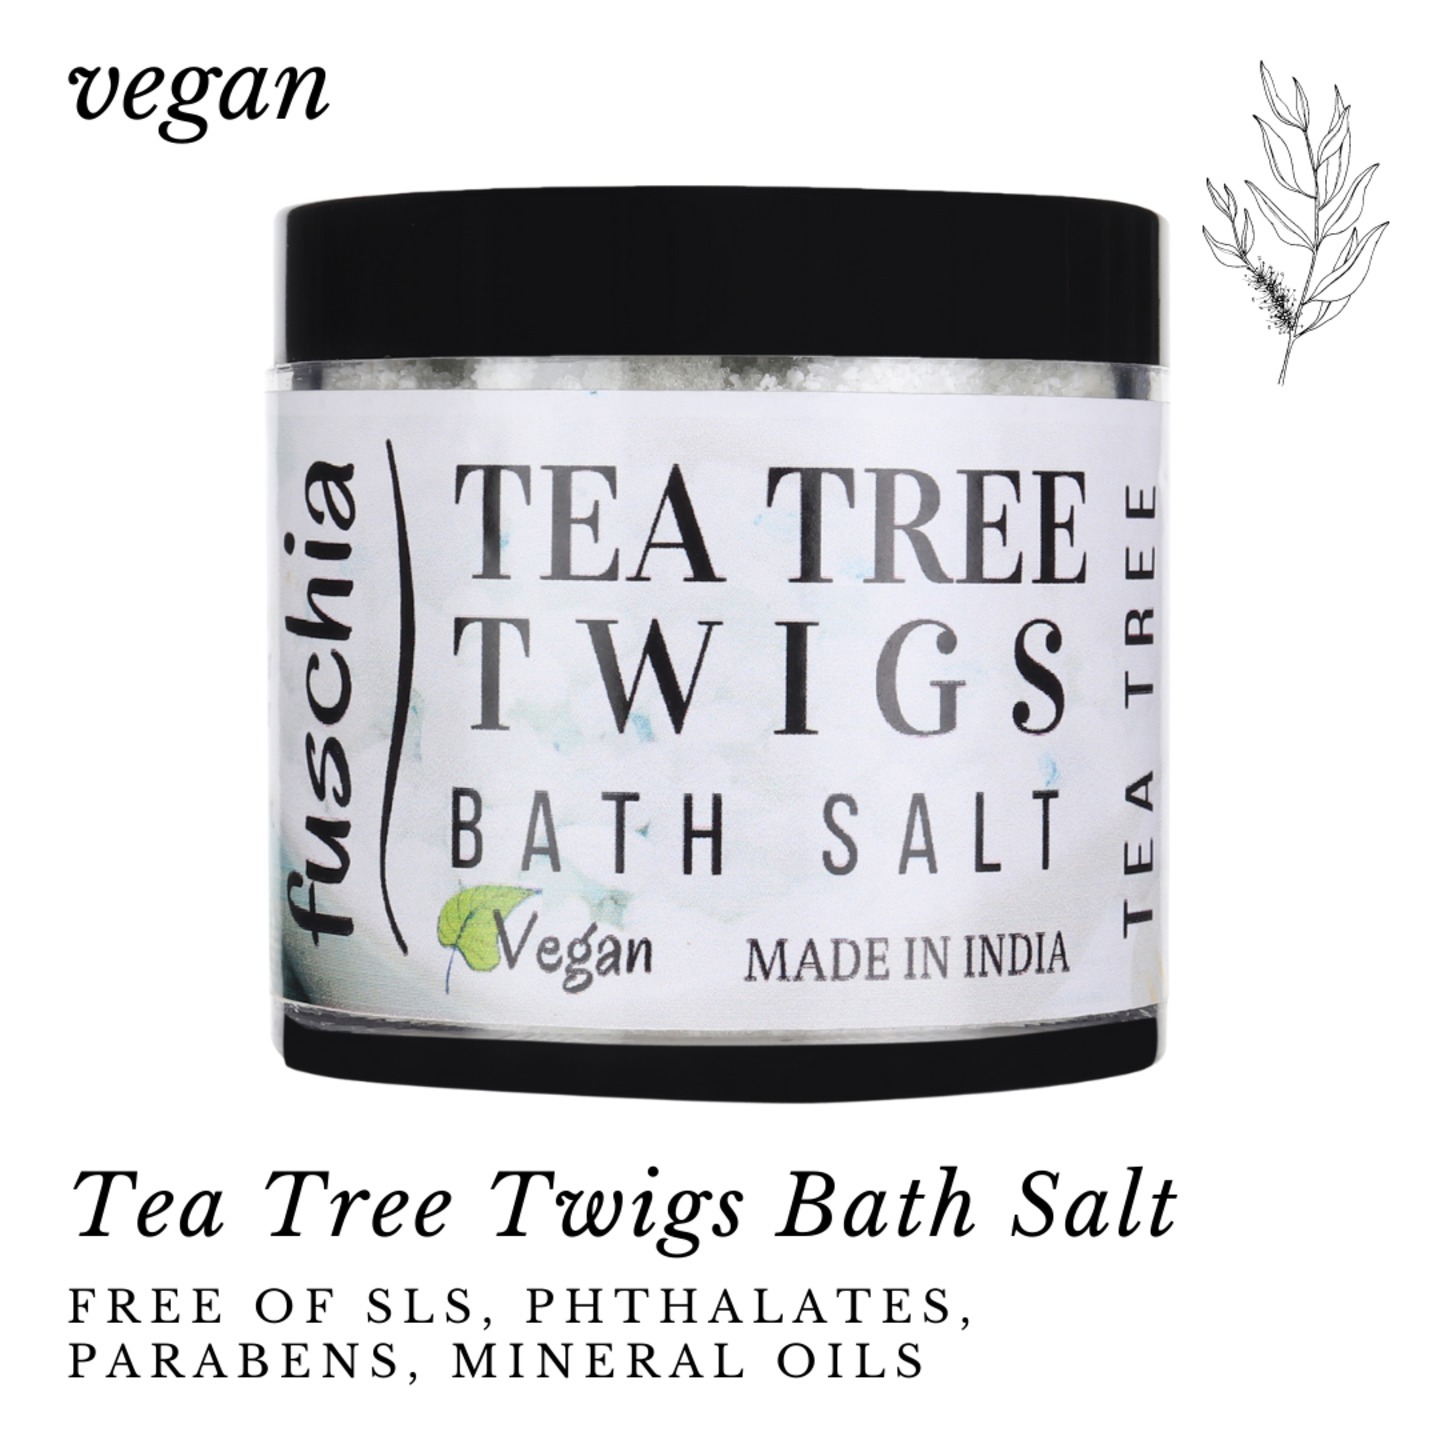 Fuschia Tea Tree Twigs Bath Salt - 100g